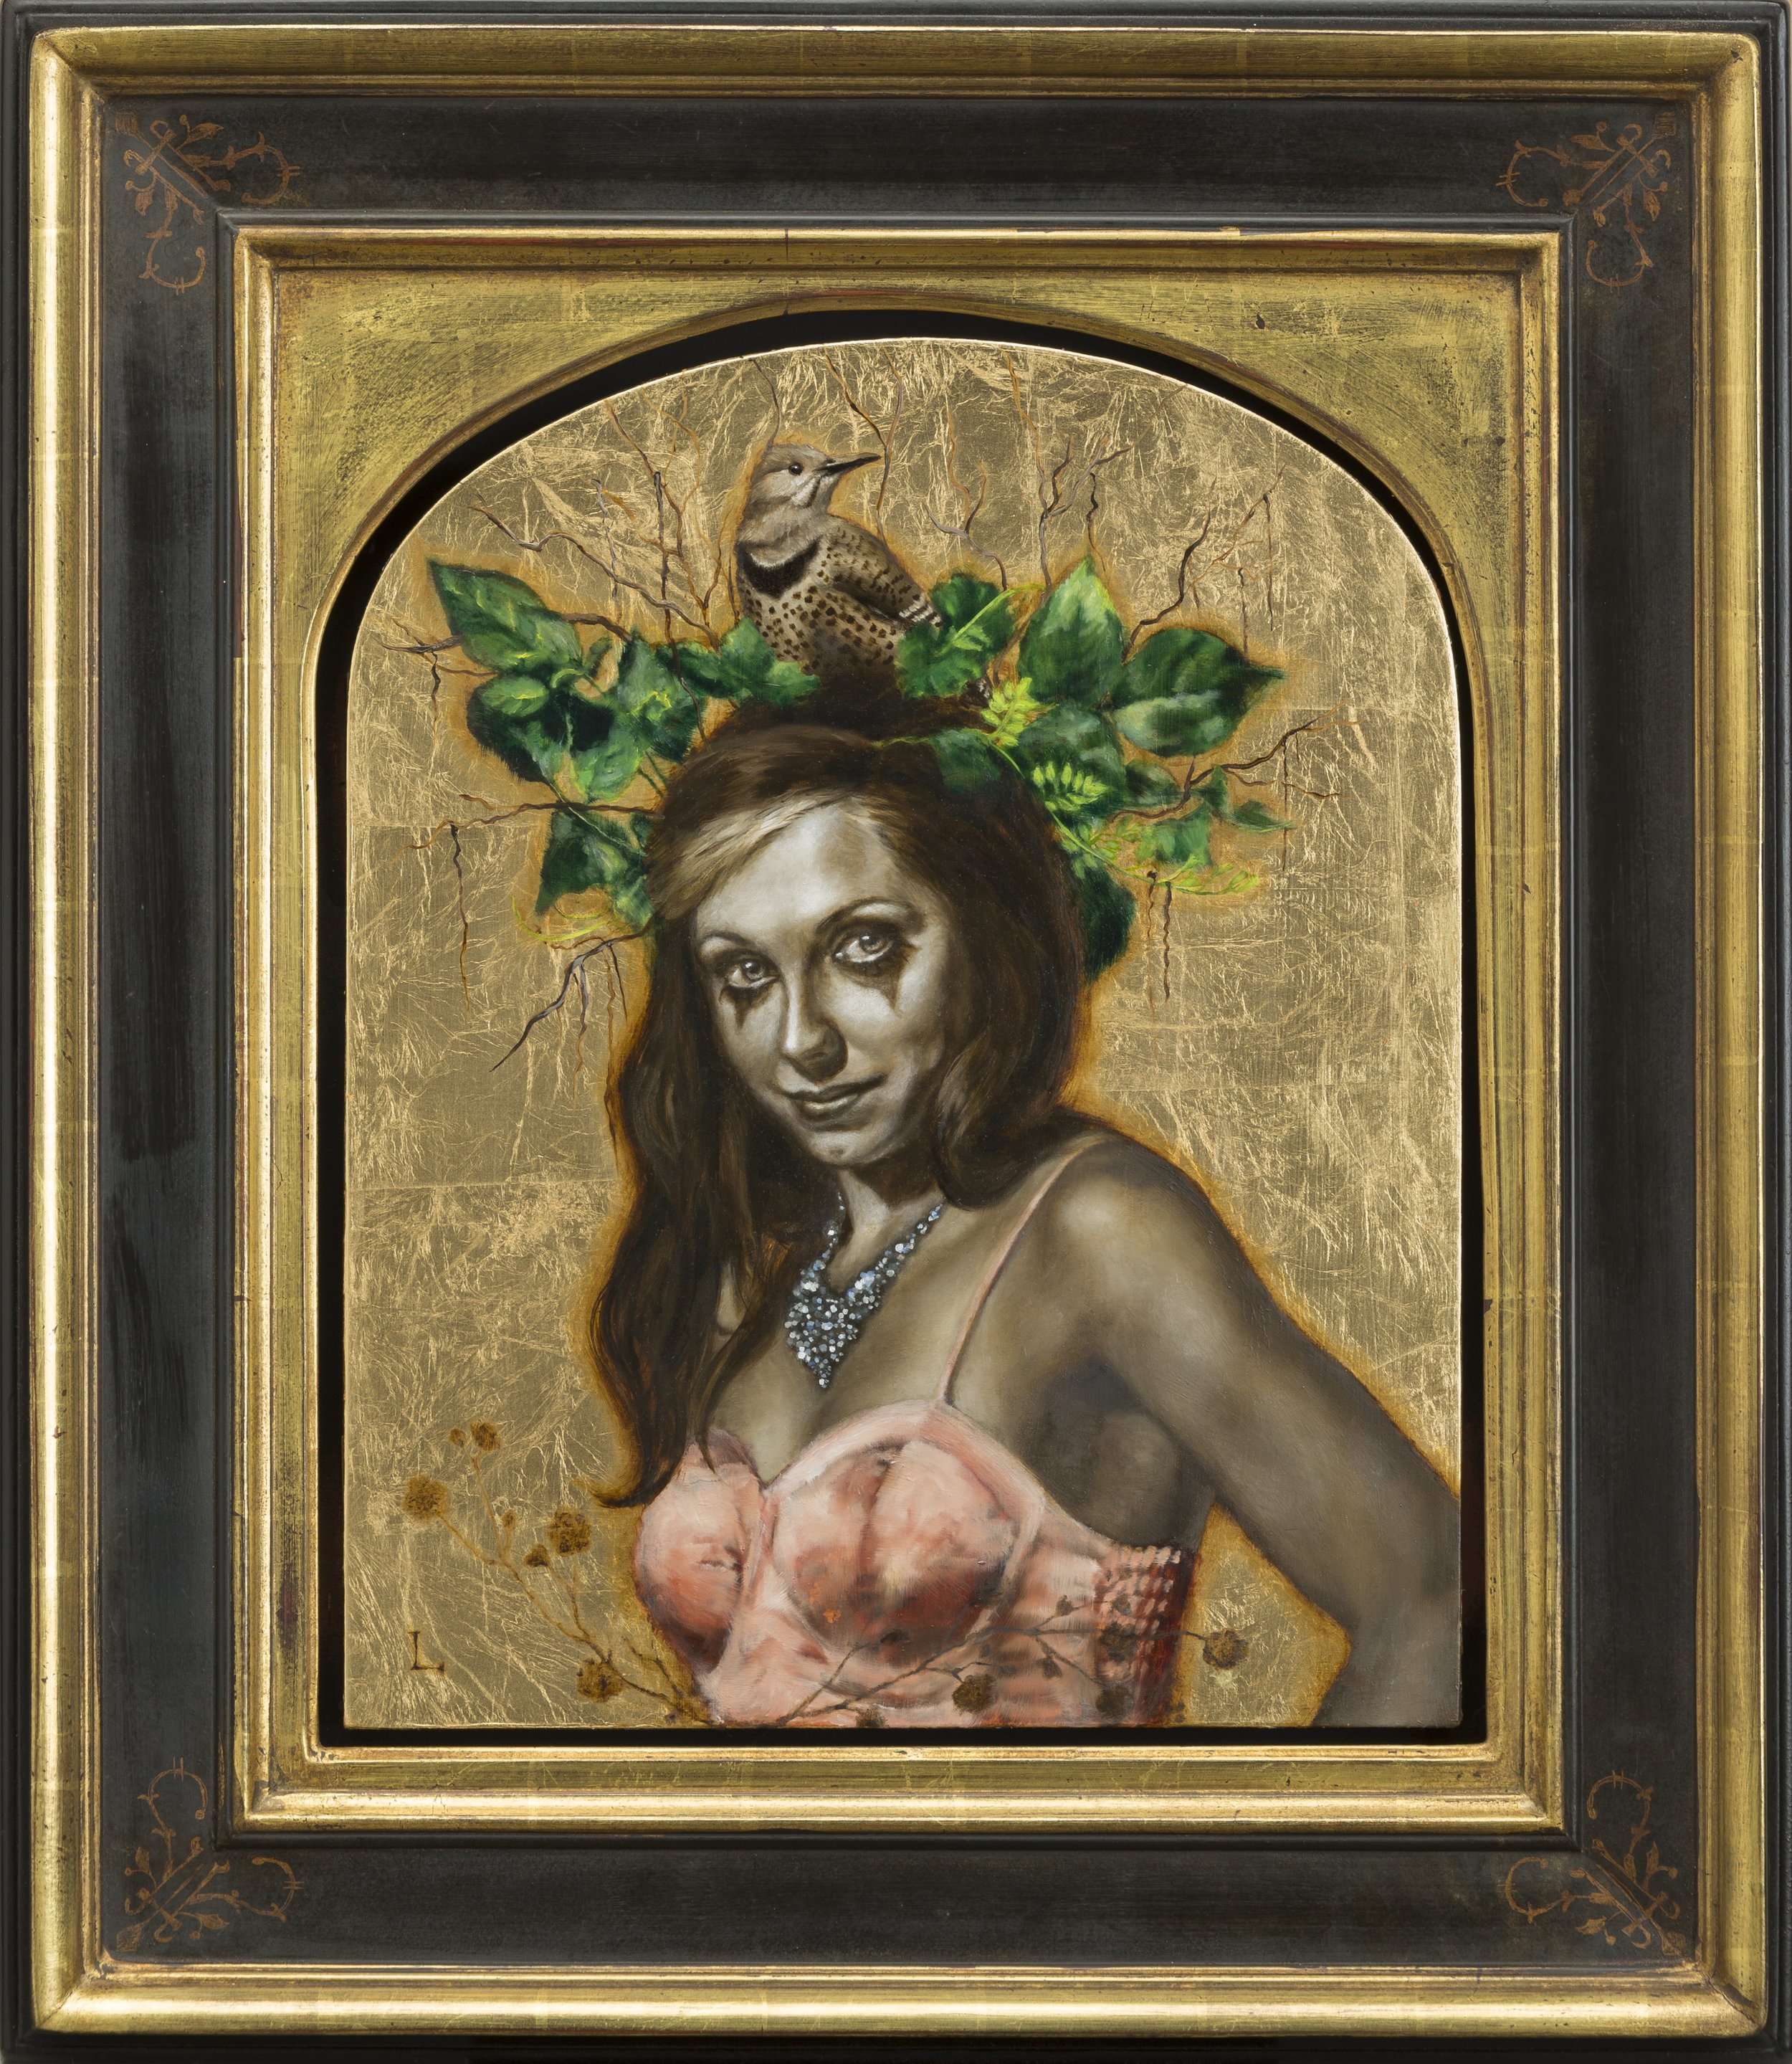 (SOLD) 'Flightless Bird' oil on gold leaf custom arch panel 26”x 26” Frame and panel by Masterworks Frames